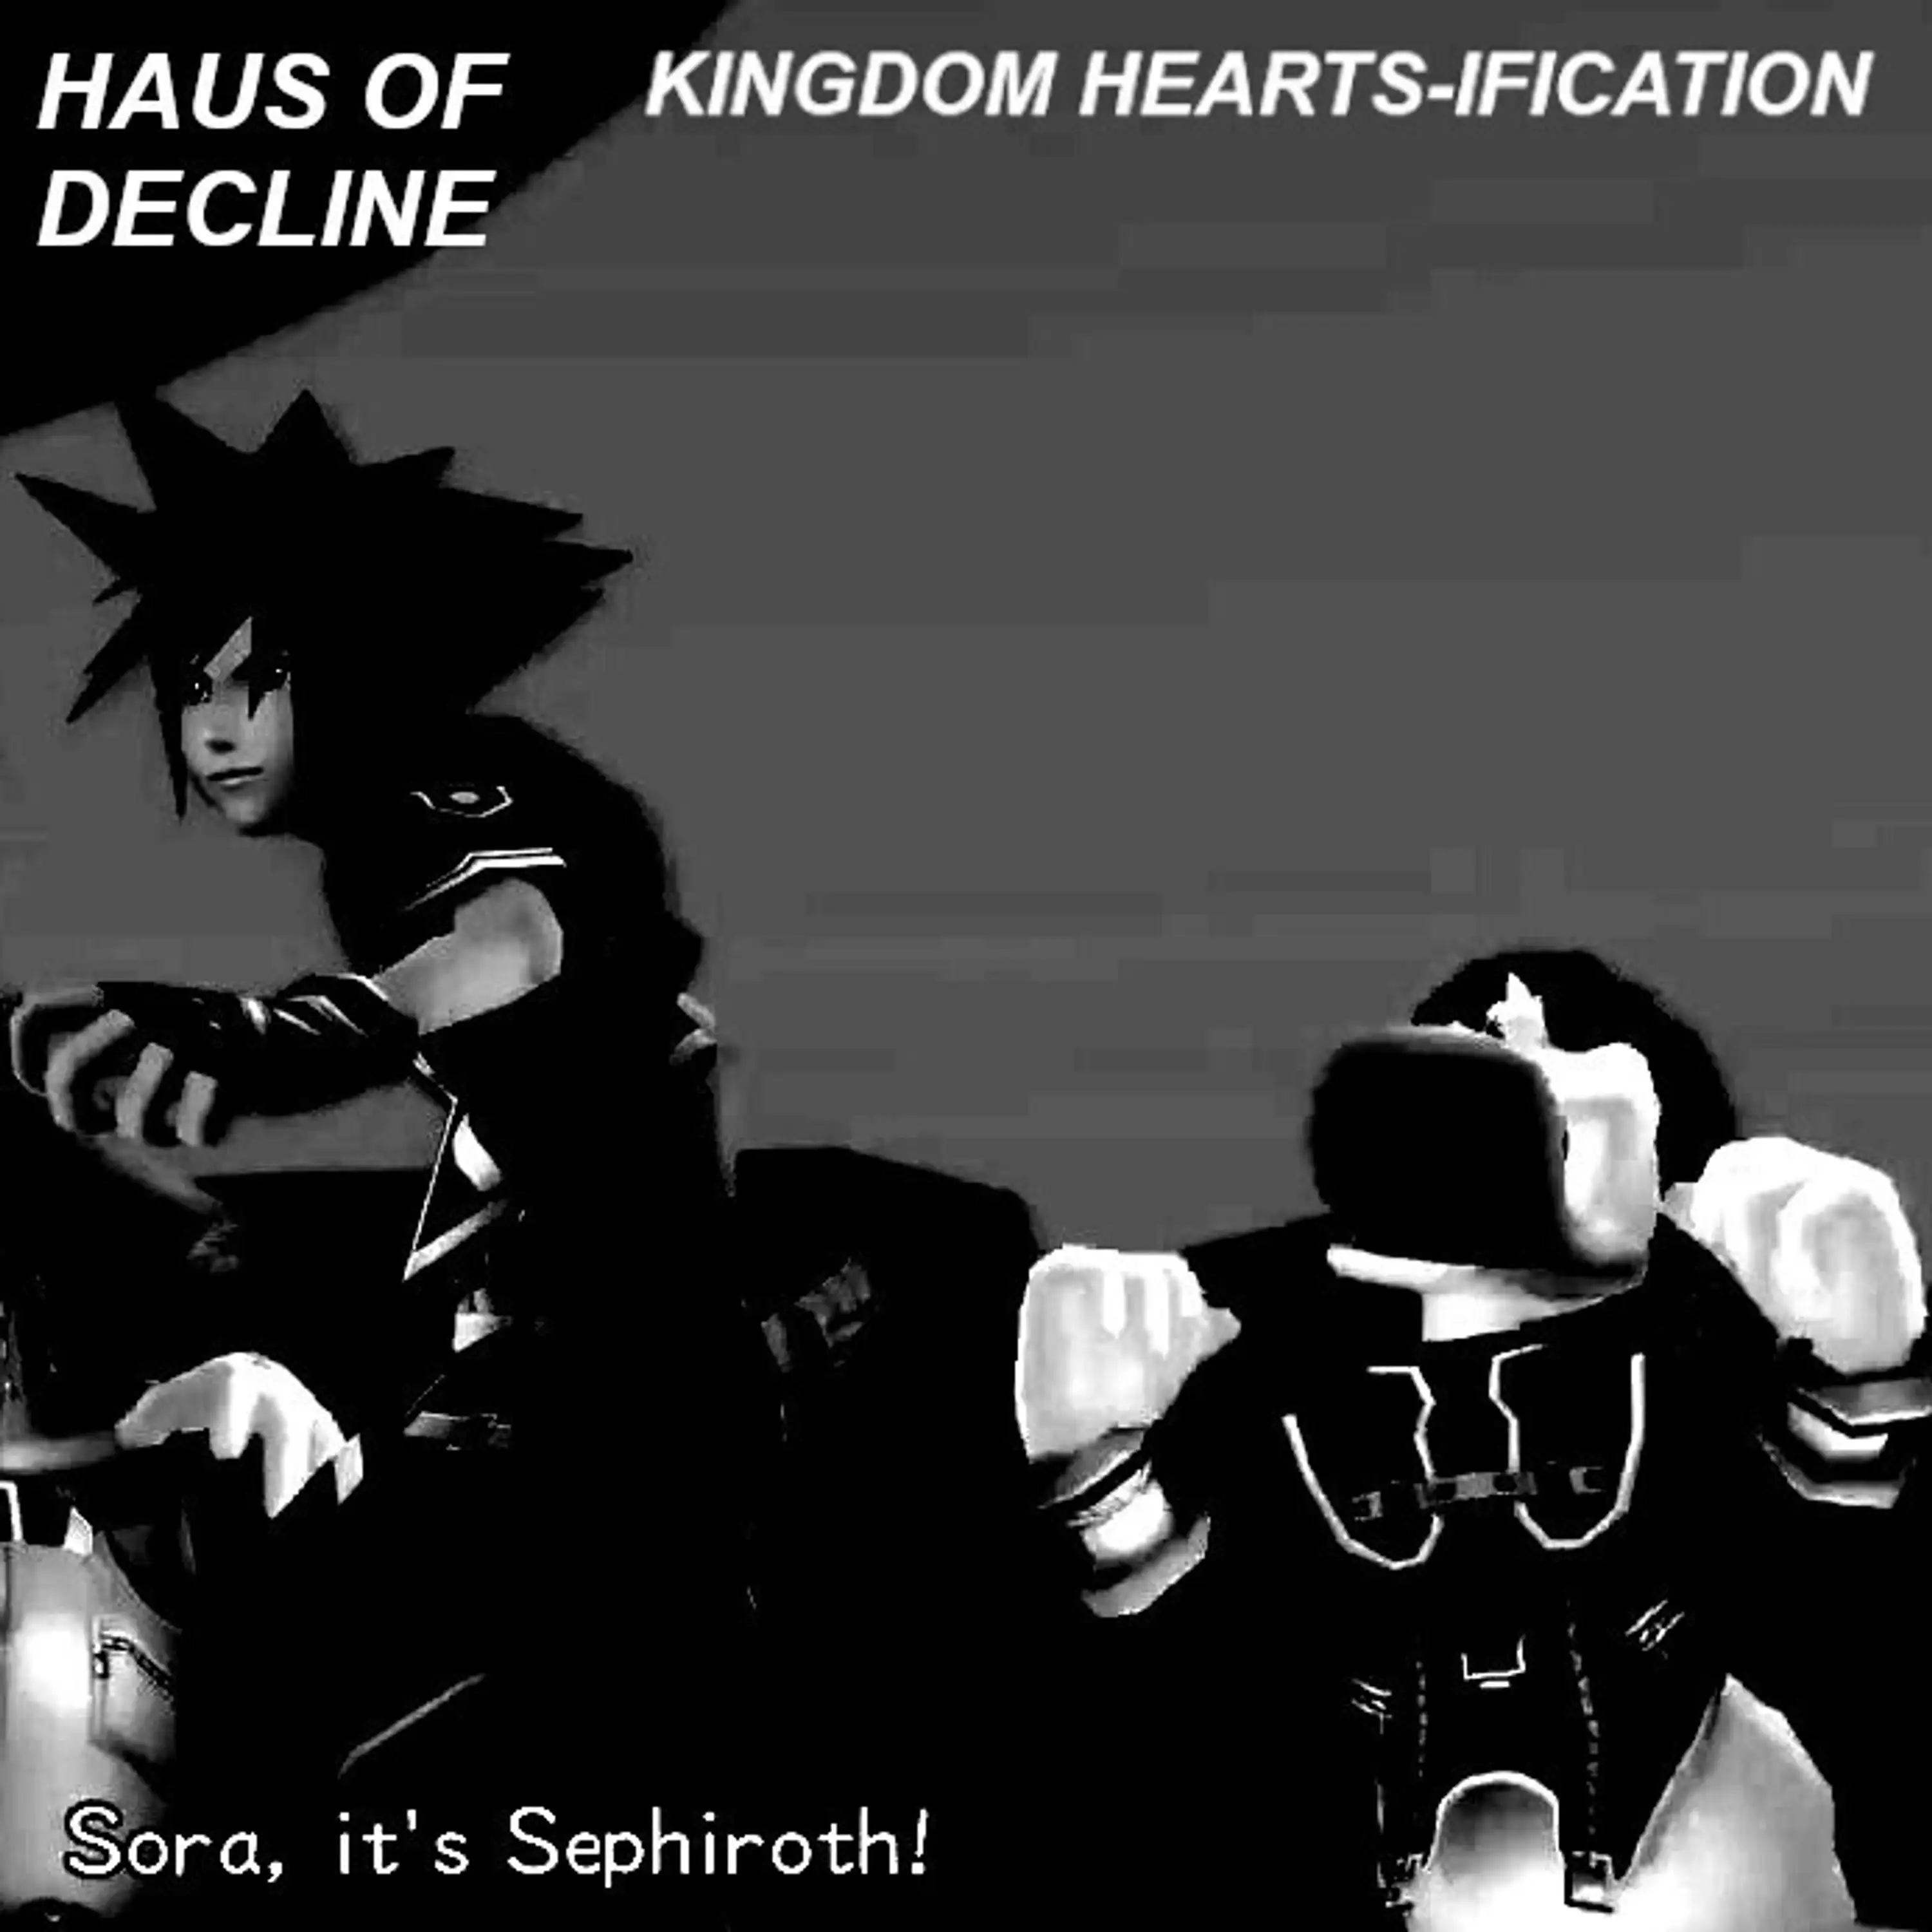 Kingdom Hearts-ification